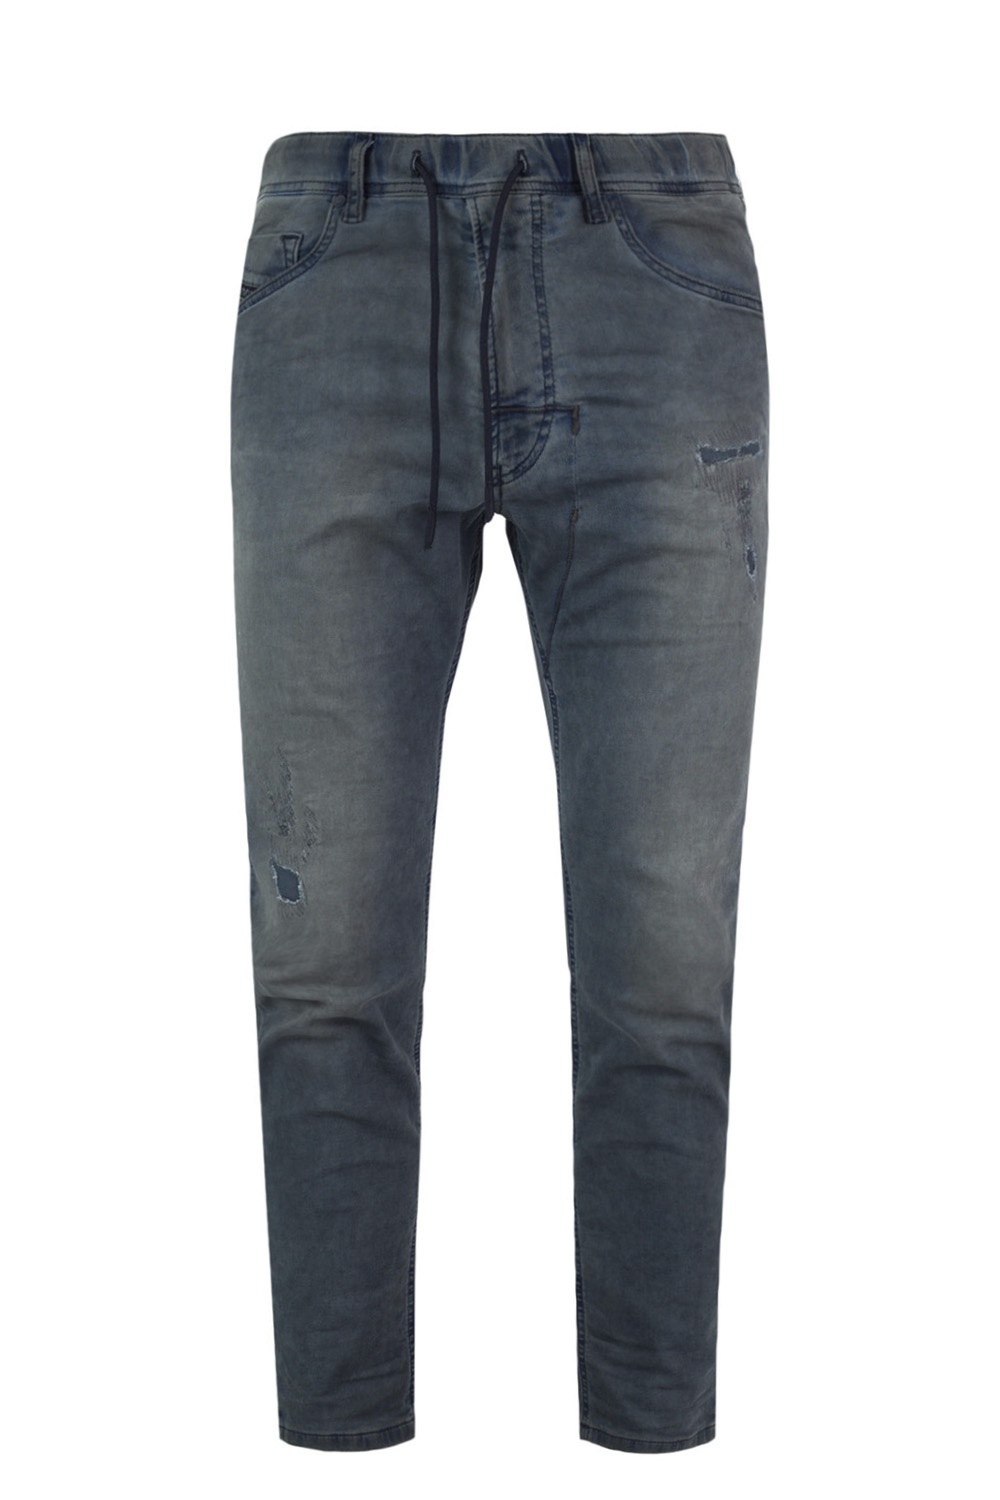 Blue 'Narrot-Ne' jeans Diesel - Vitkac GB